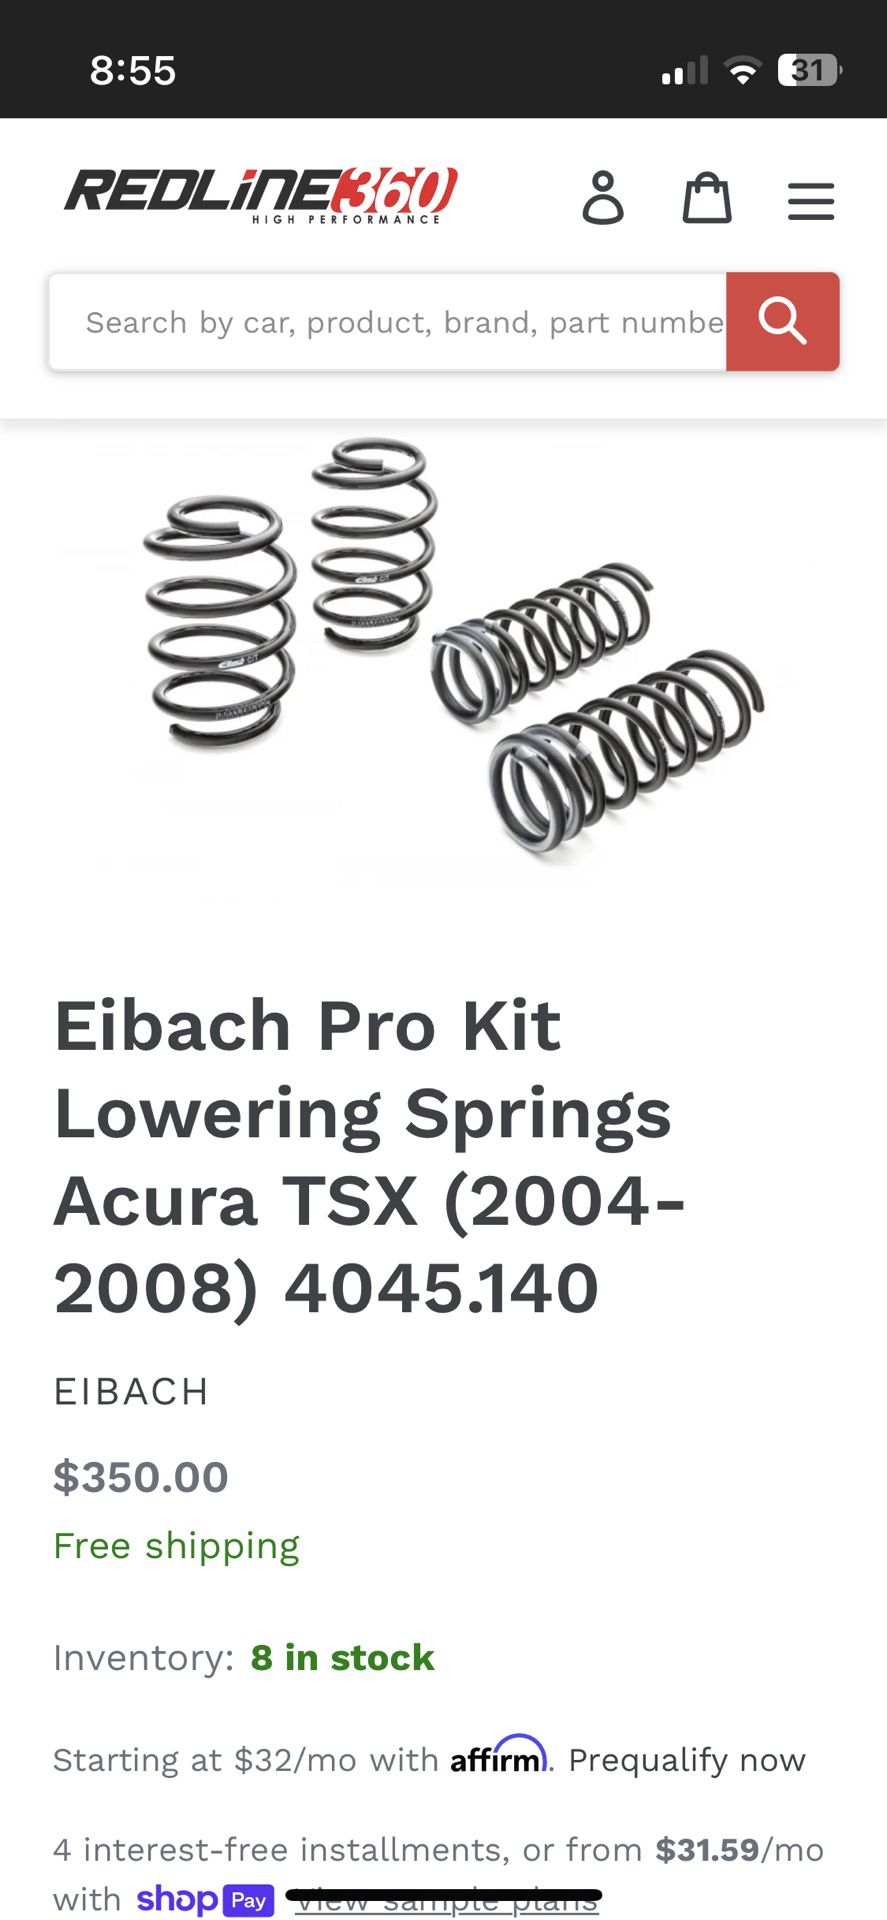 Eibach Pro Kit Lowering Springs Acura TSX (2004-2008)